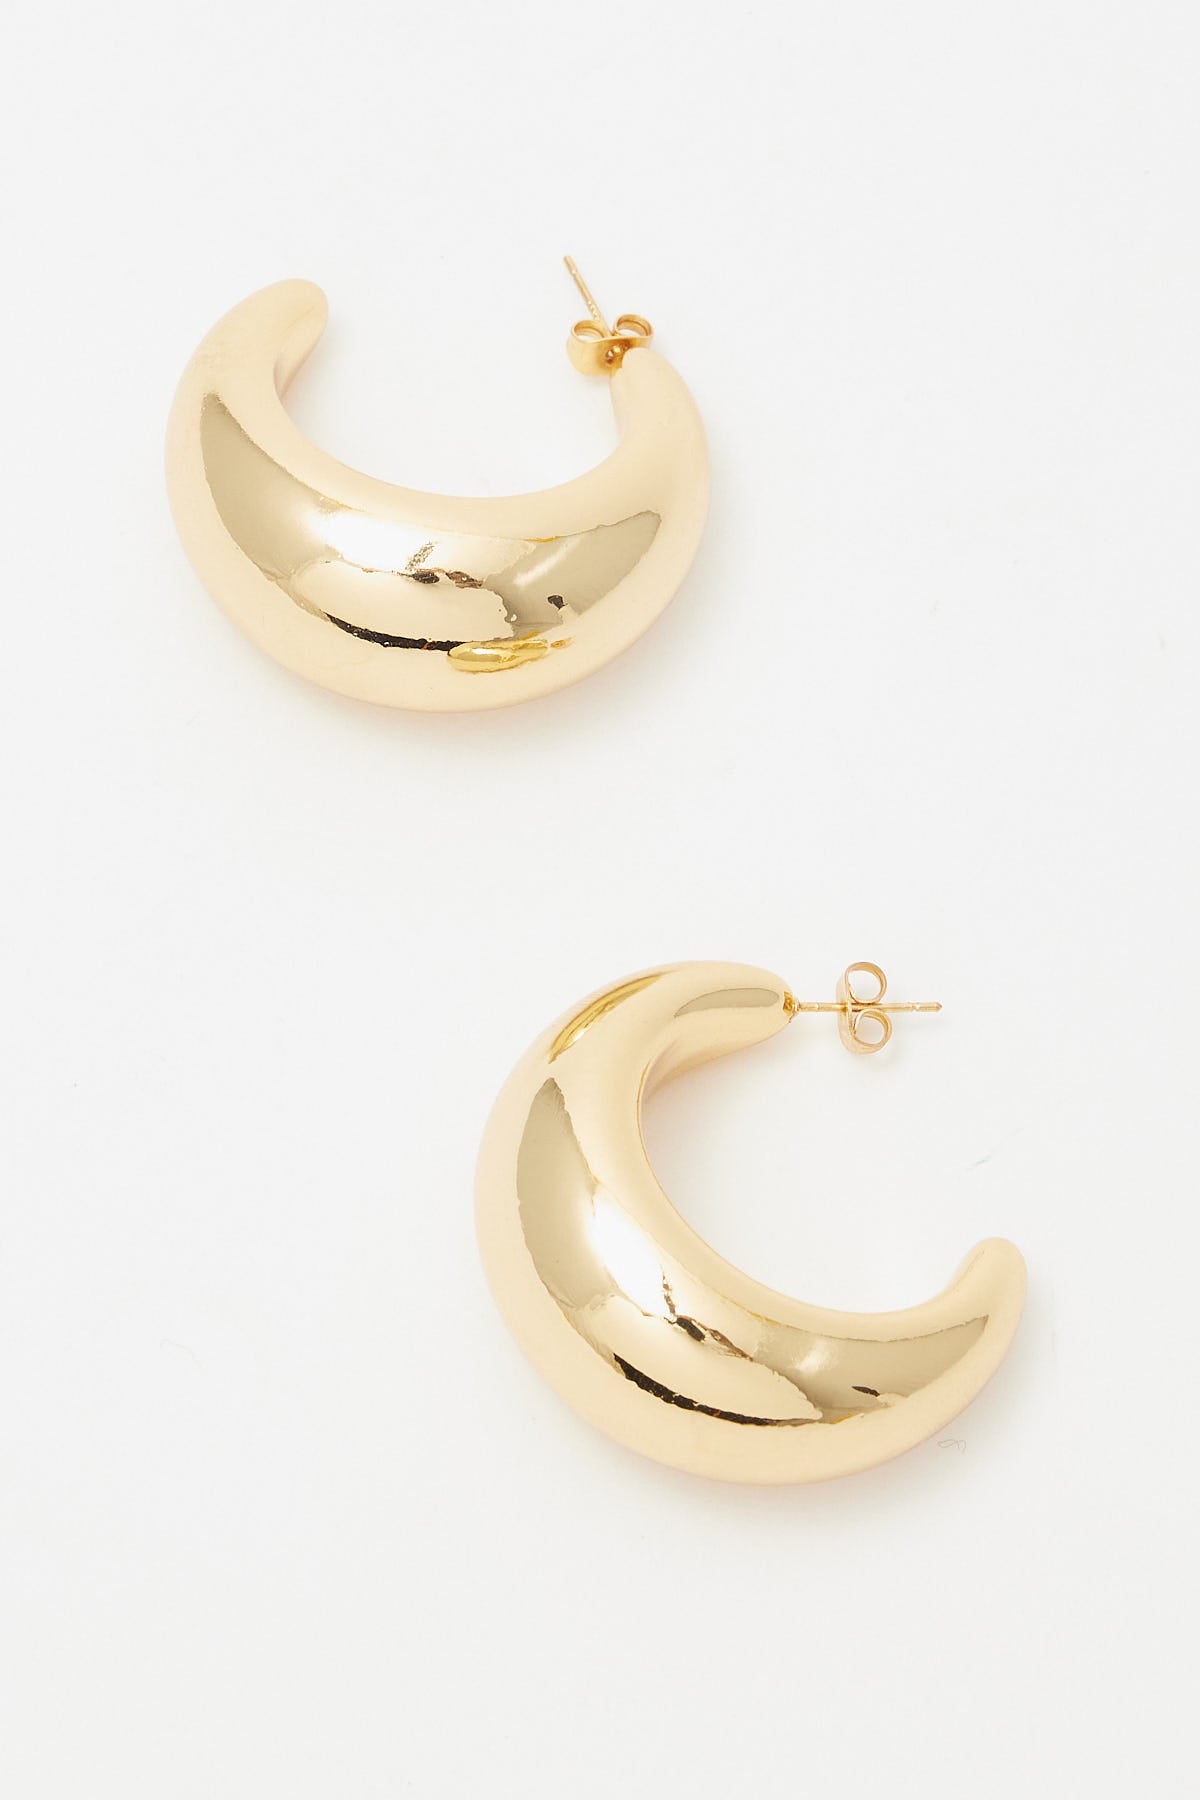 Perfect Stranger Gloria Gold Hoop Earrings 18K Gold Plated